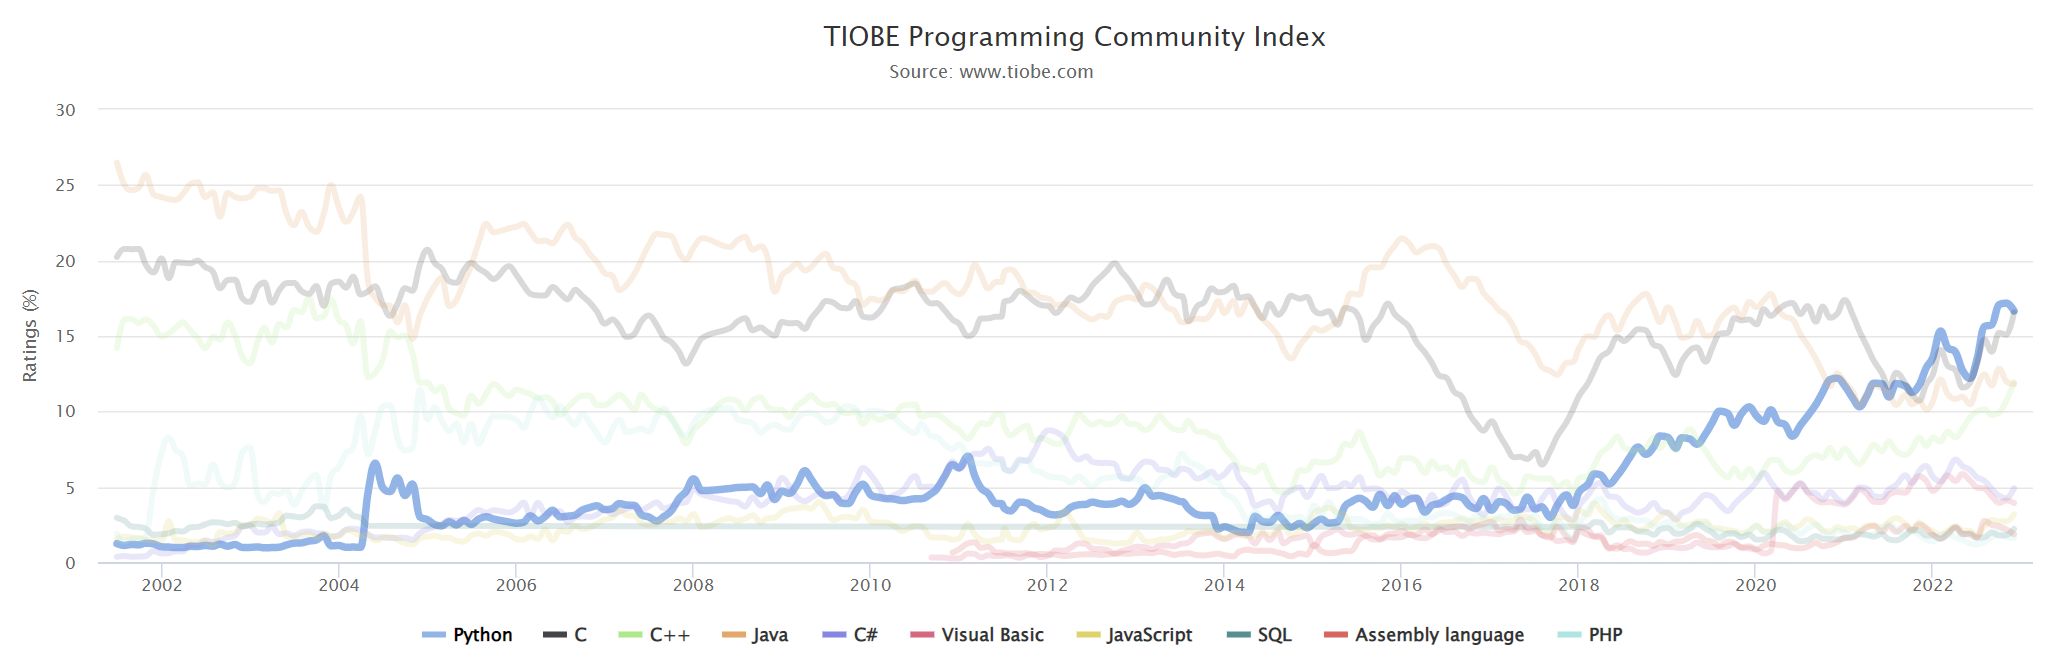 TIOBE's Programming community index